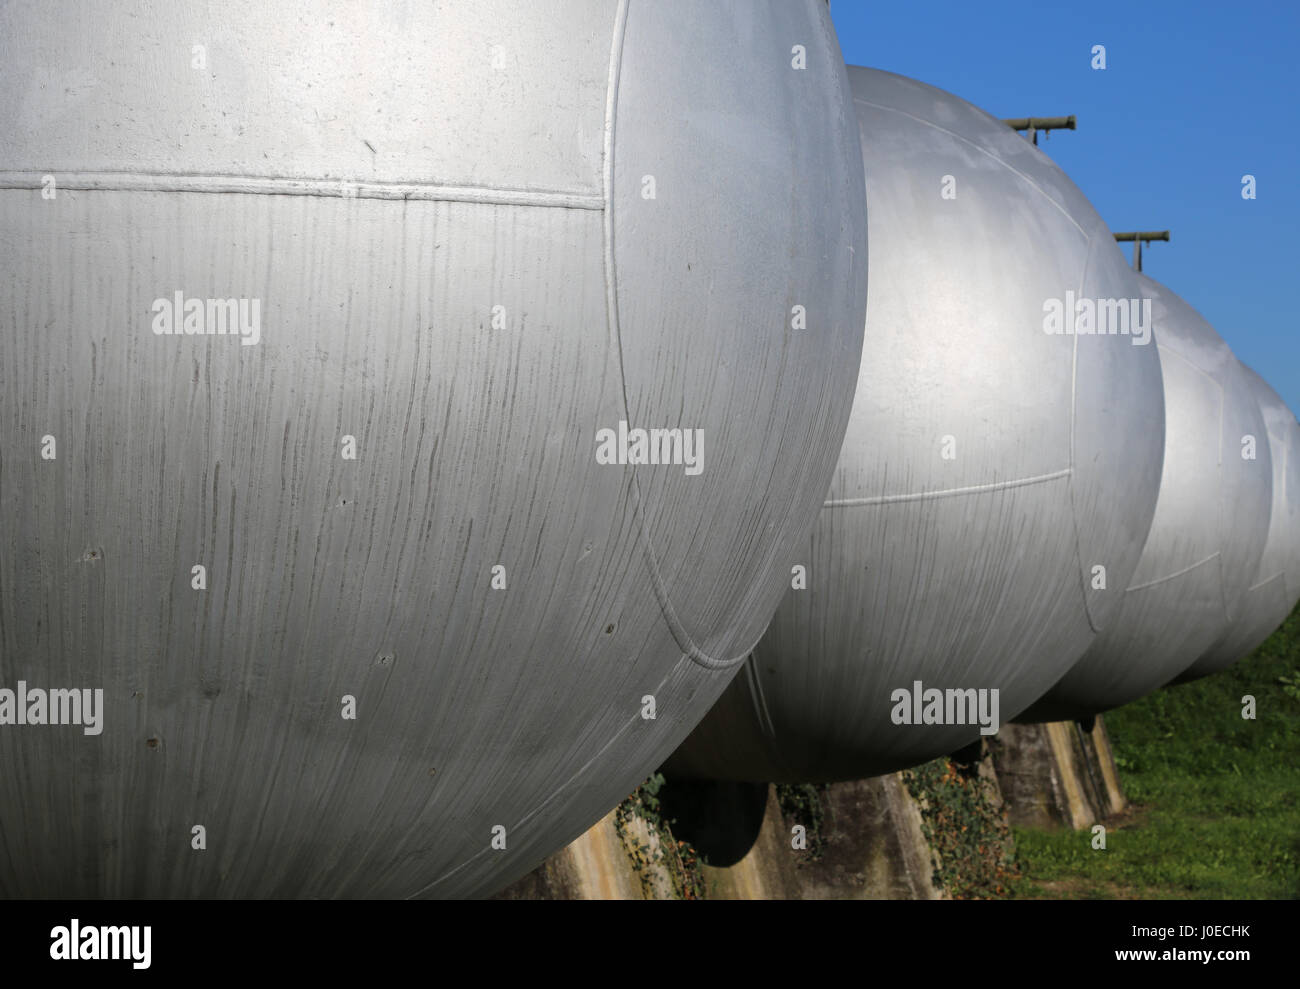 do modern gas tanks build pressure inside them